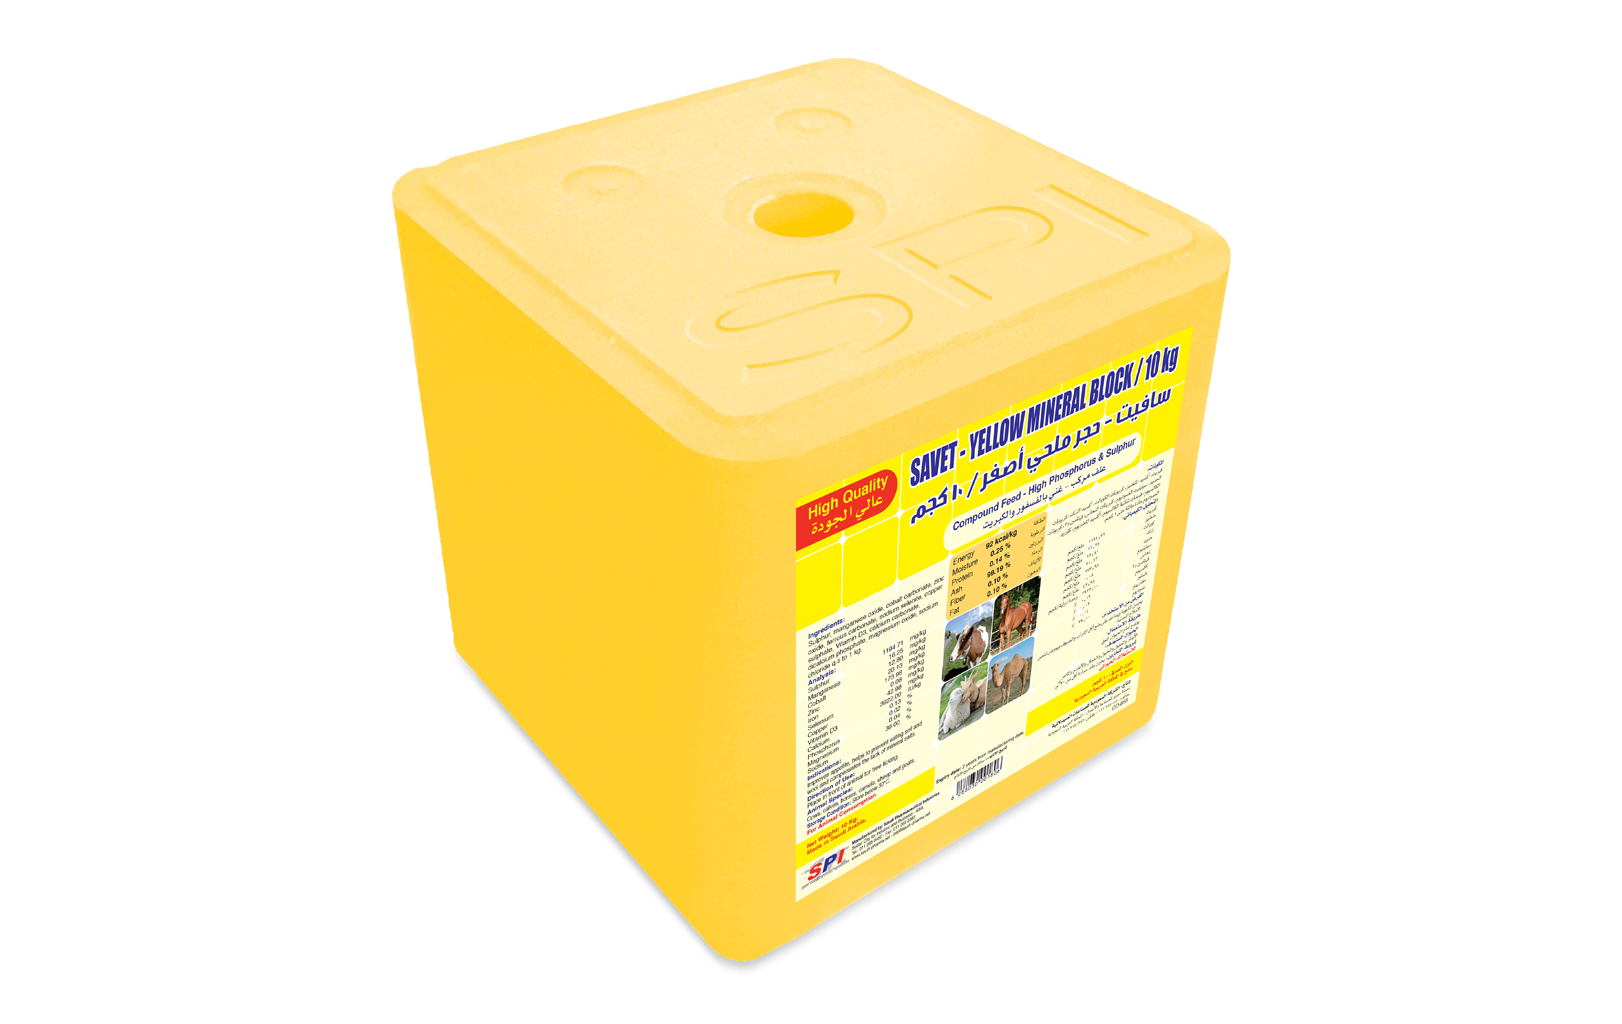 Savet-Yellow mineral block 10KG